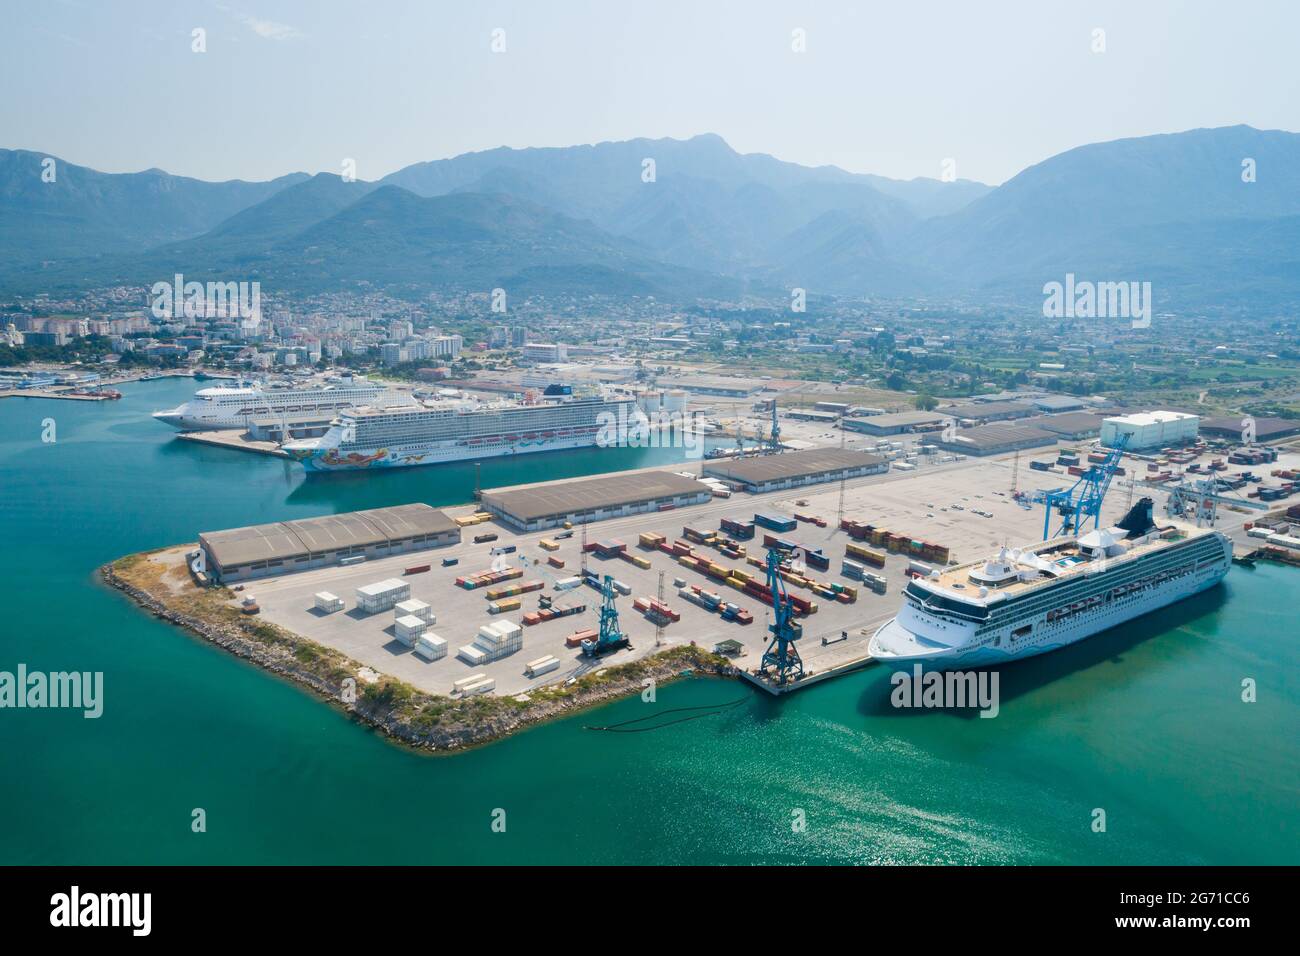 Bar, Montenegro - July 9, 2021: cruise ships Norwegian Spirit and Norwegian Getaway in port, aerial. Stock Photo